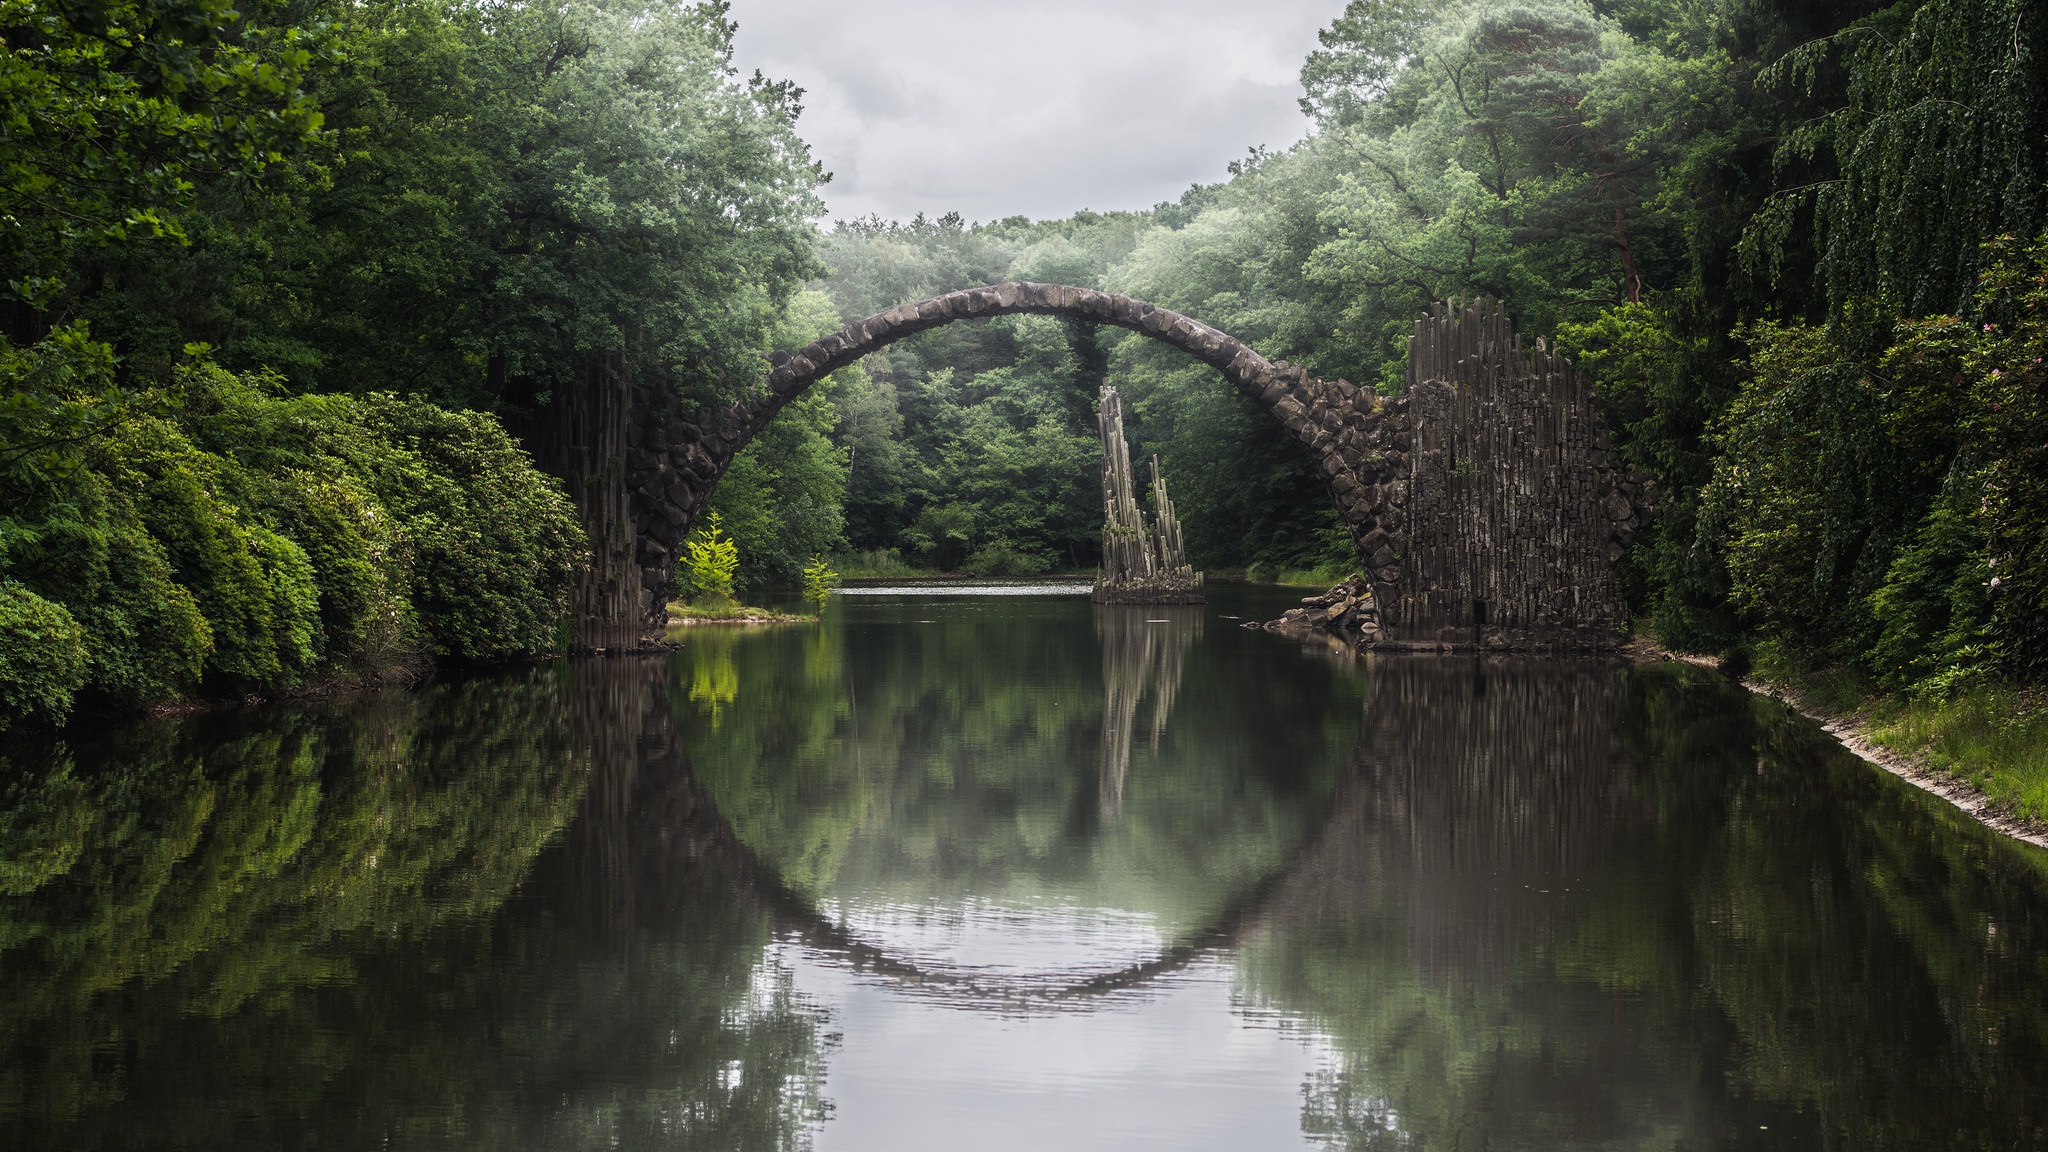 man made, devil's bridge, bridge, nature, reflection, river